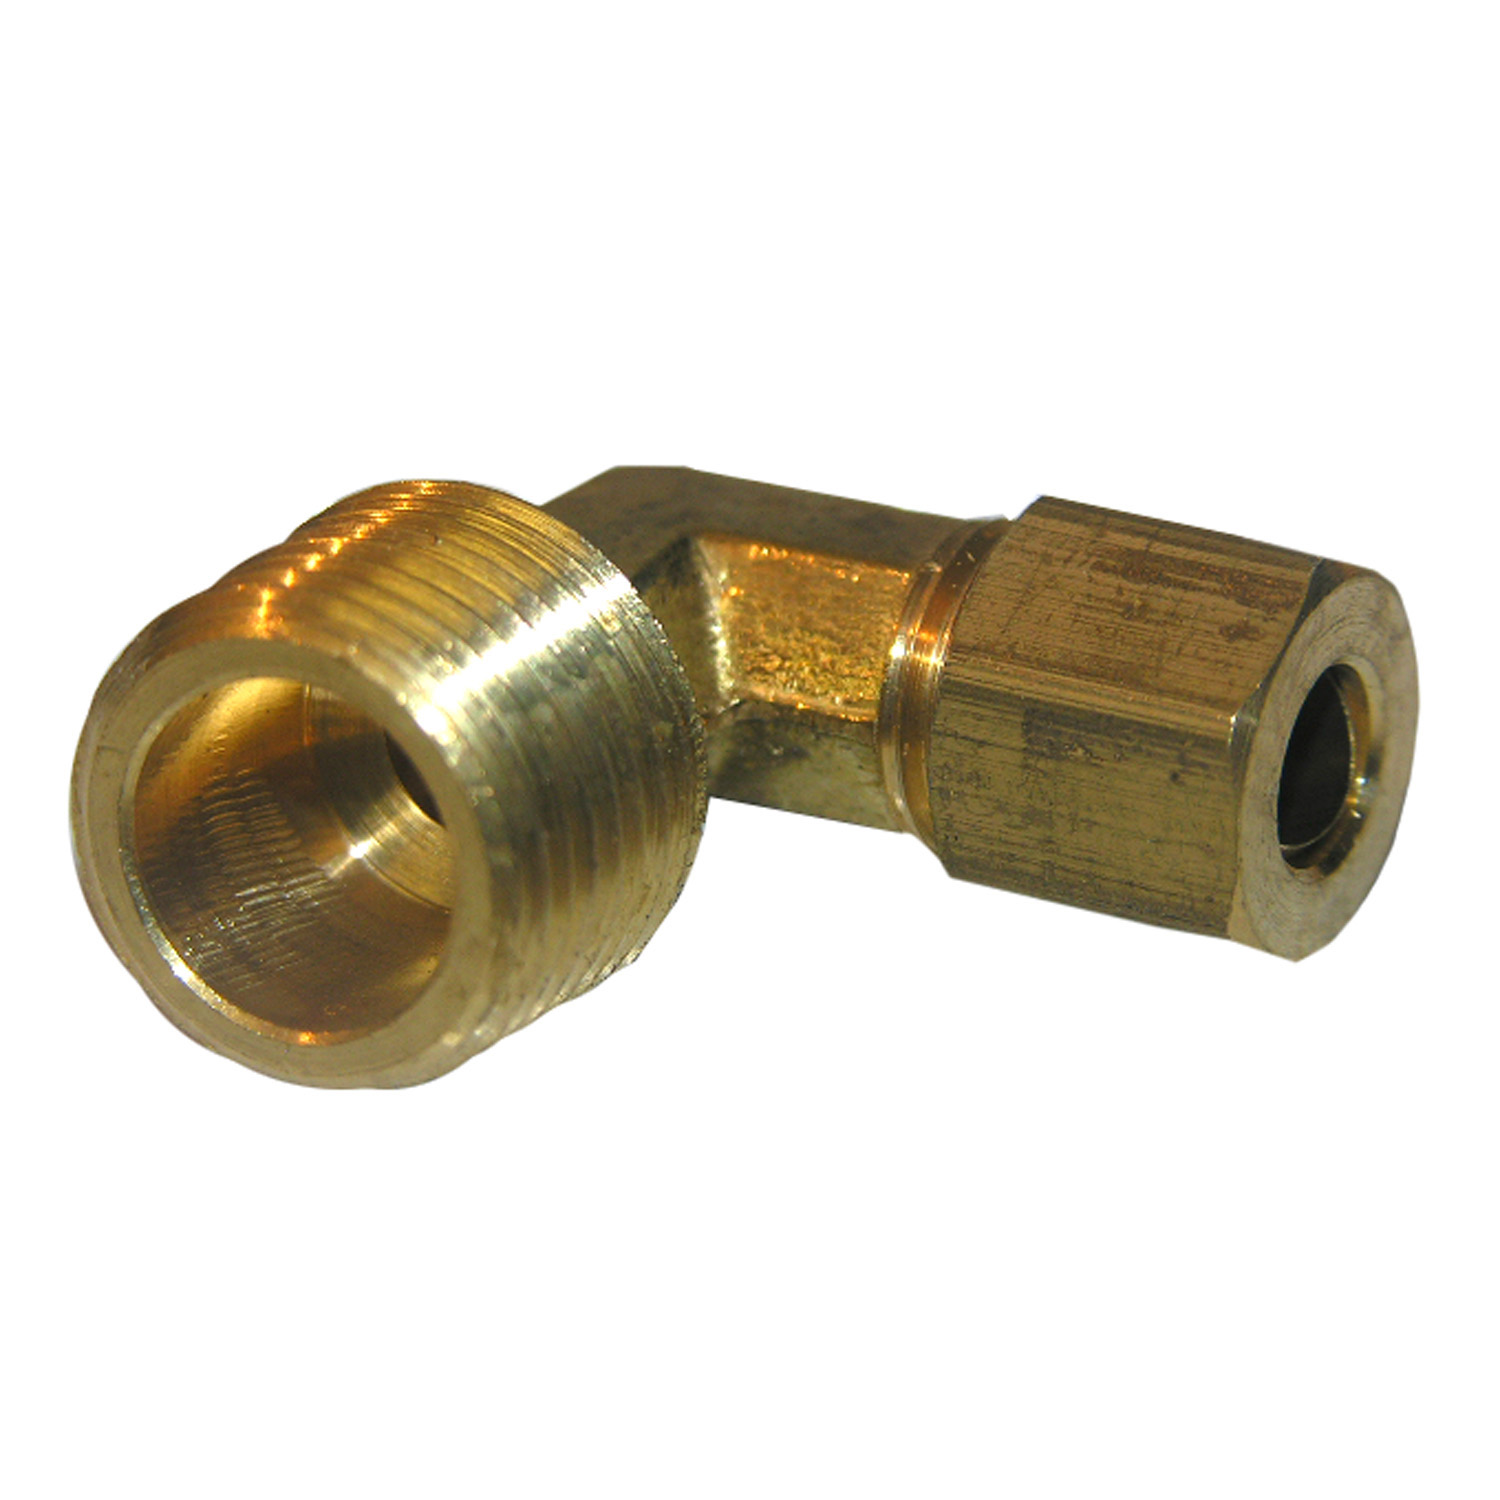 17-6913 Pipe Elbow, 1/4 x 3/8 in, Compression x MIP, 90 deg Angle, Brass, 150 psi Pressure